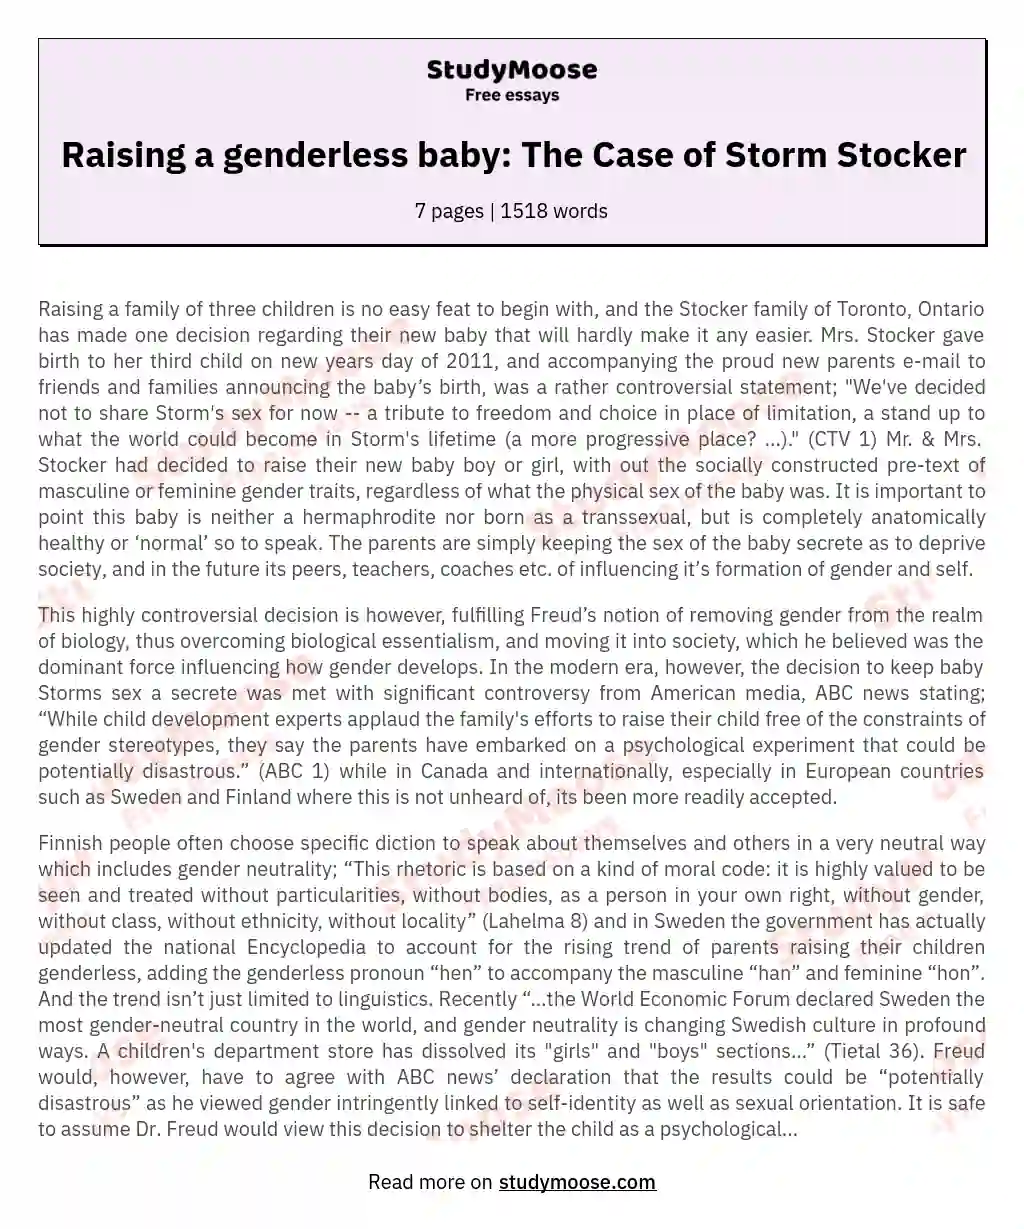 Raising a genderless baby: The Case of Storm Stocker essay